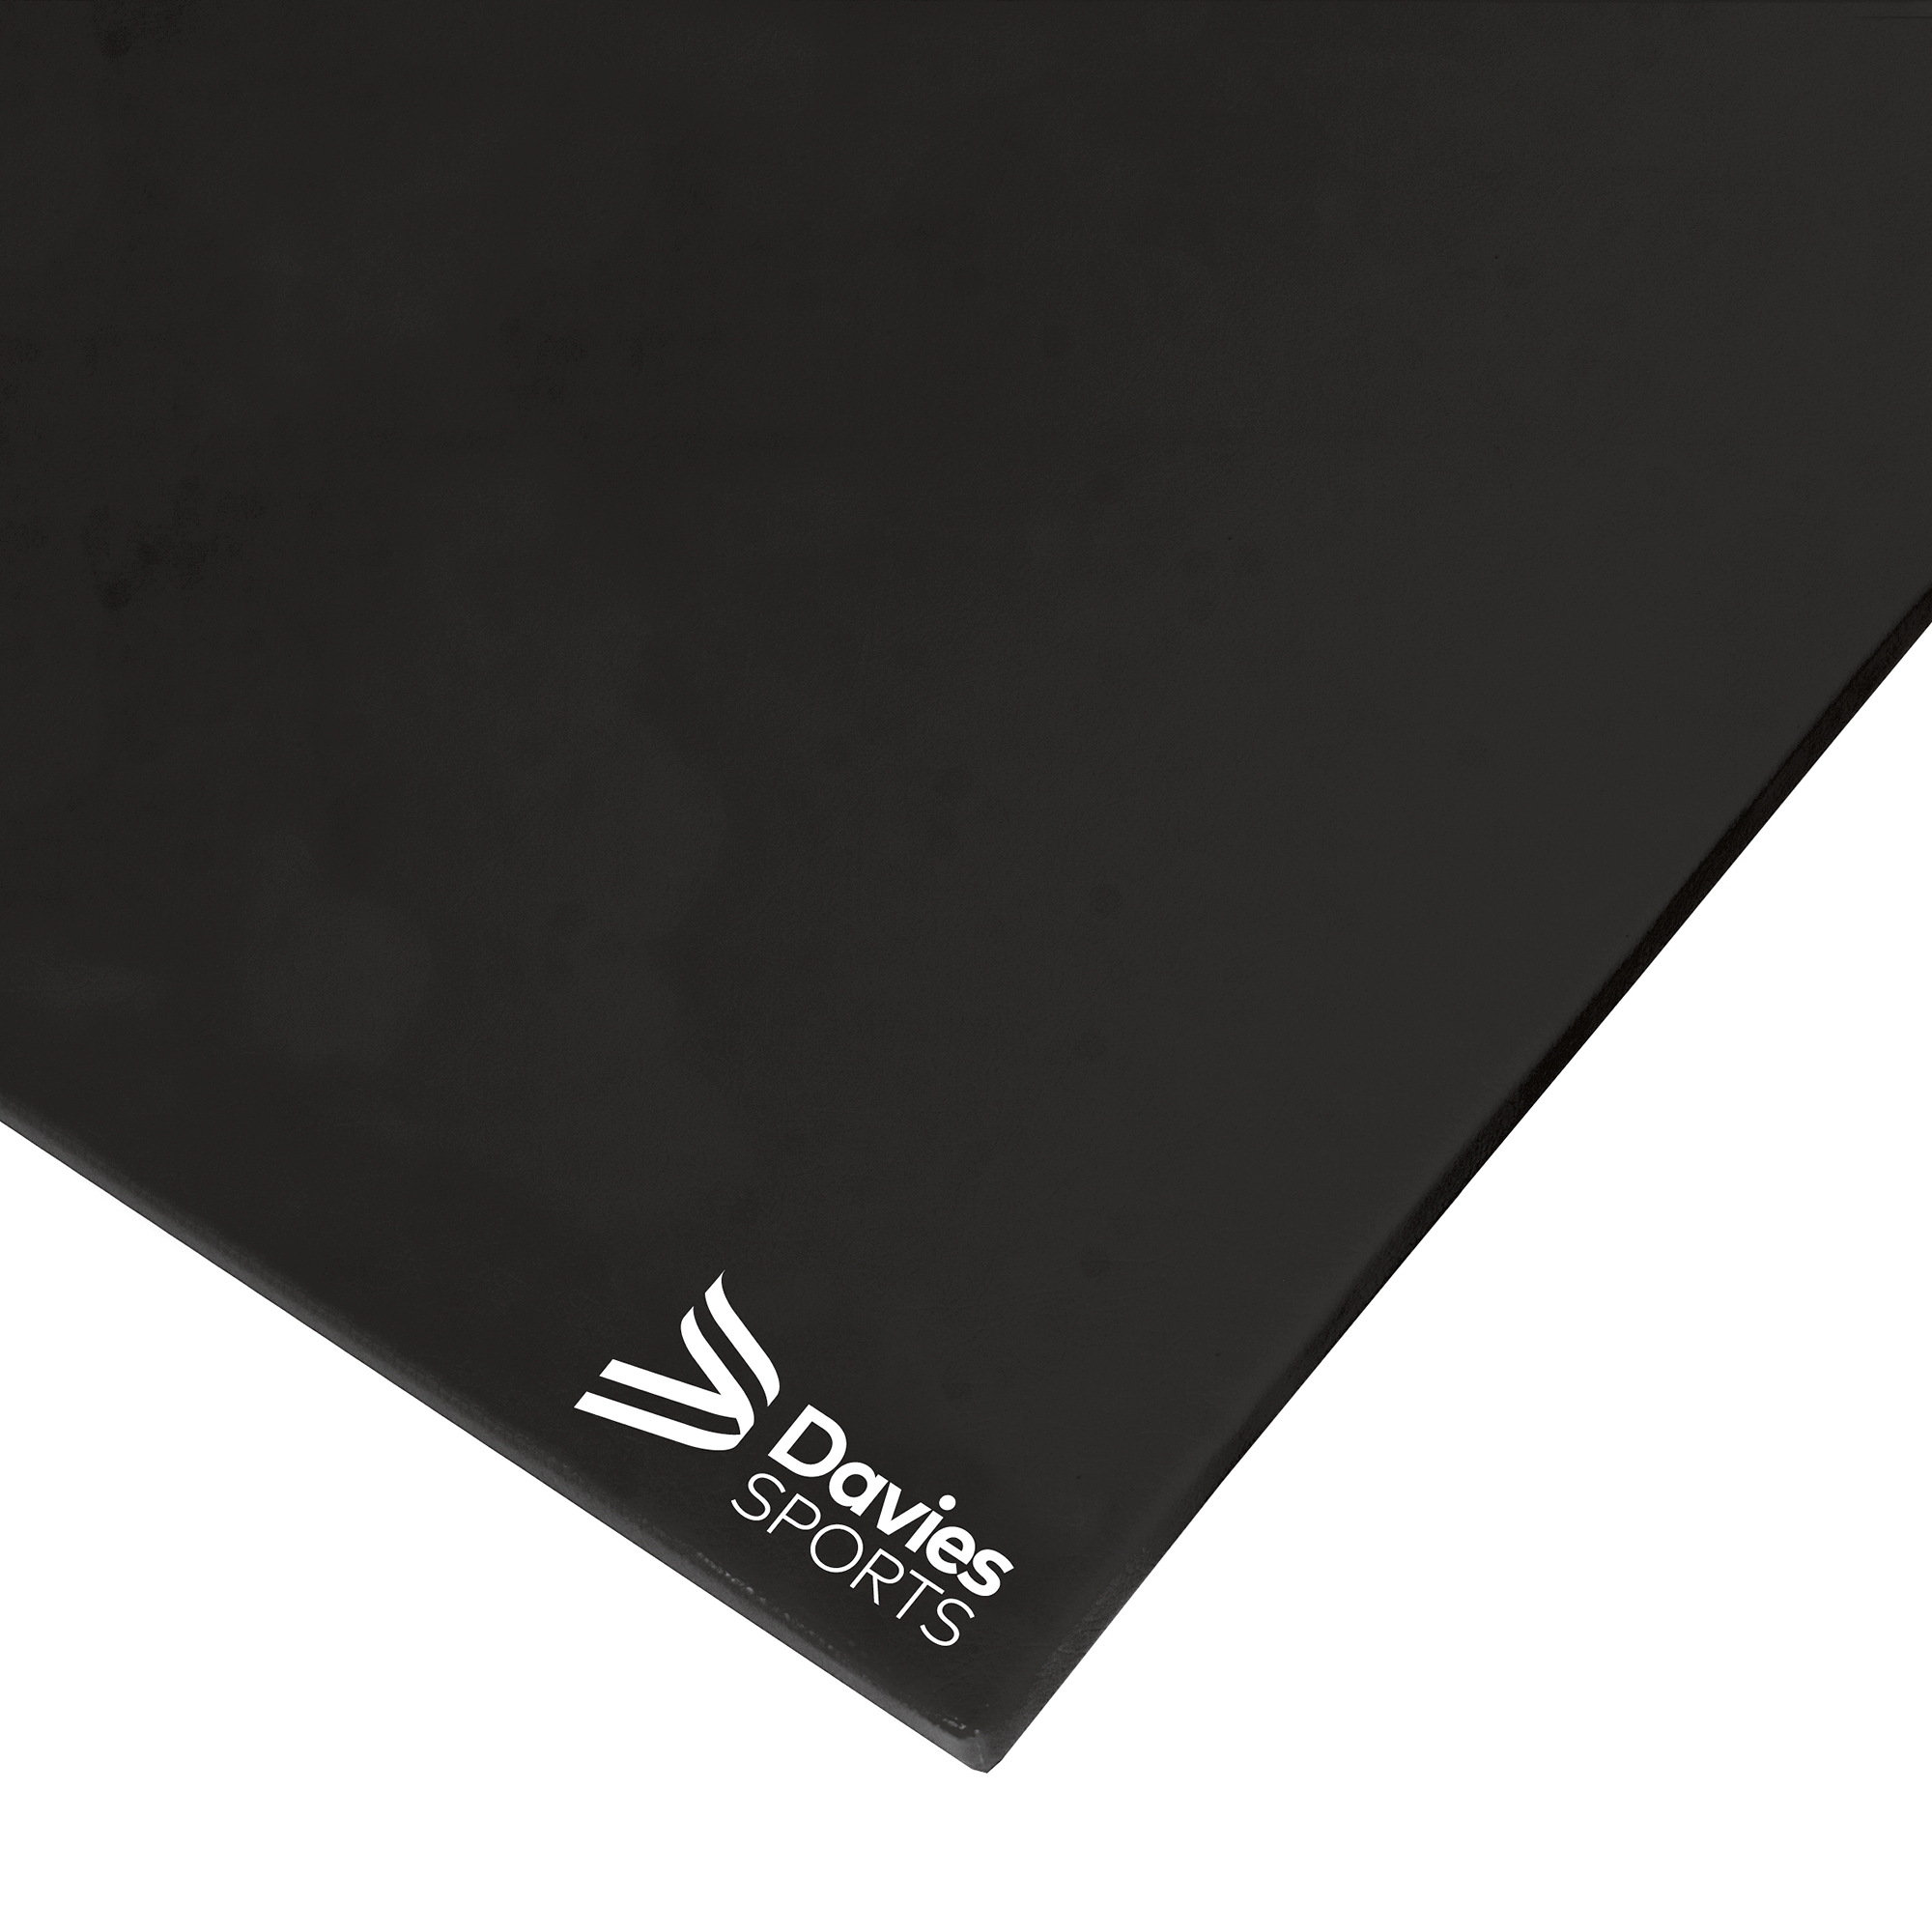 Davies Sports Medium Weight Gym Mat Standard Black Cellular Base - 1.22m x 0.91m x 25mm